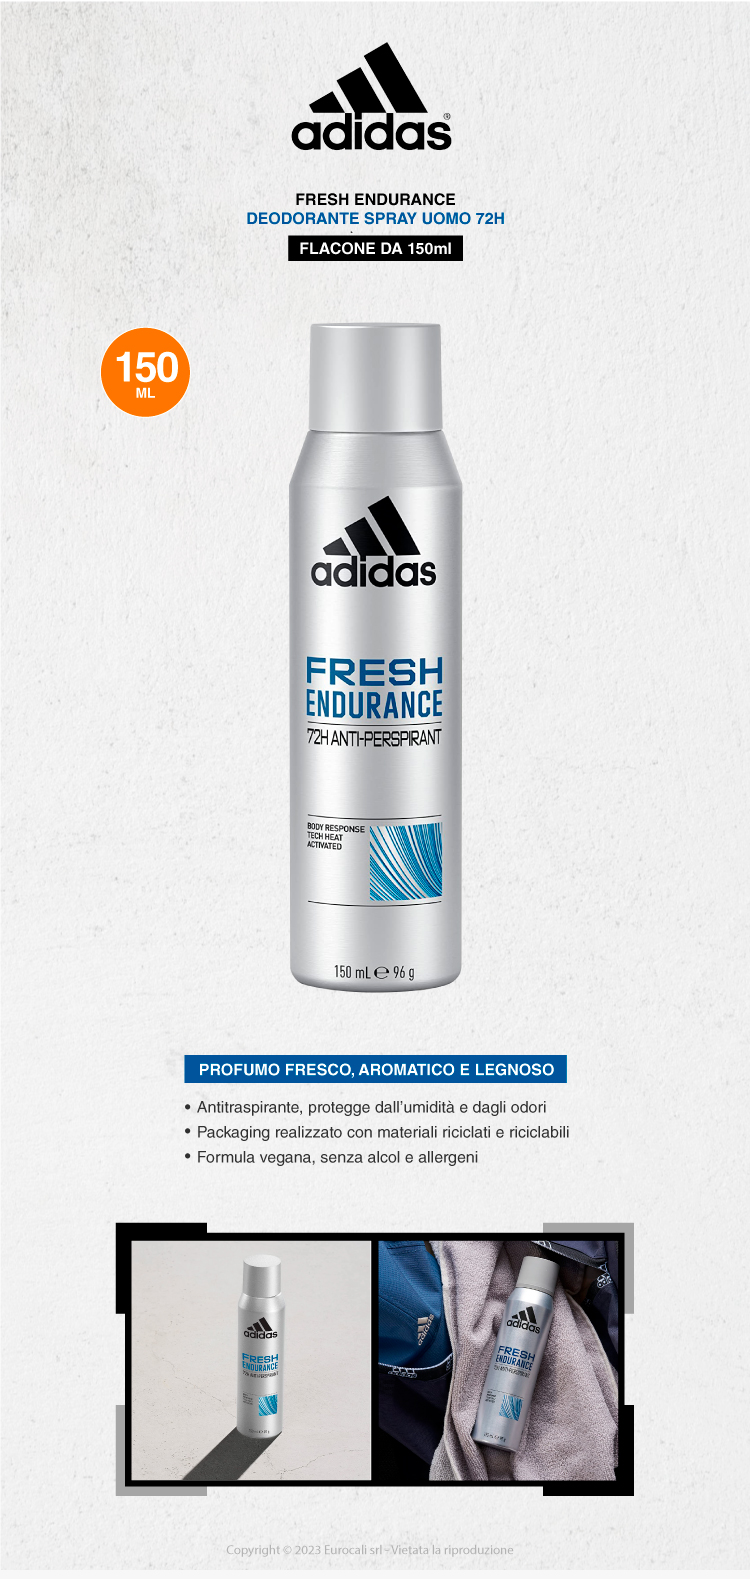 adidas fresh endurance deodorante uomo 72h spray 150ml